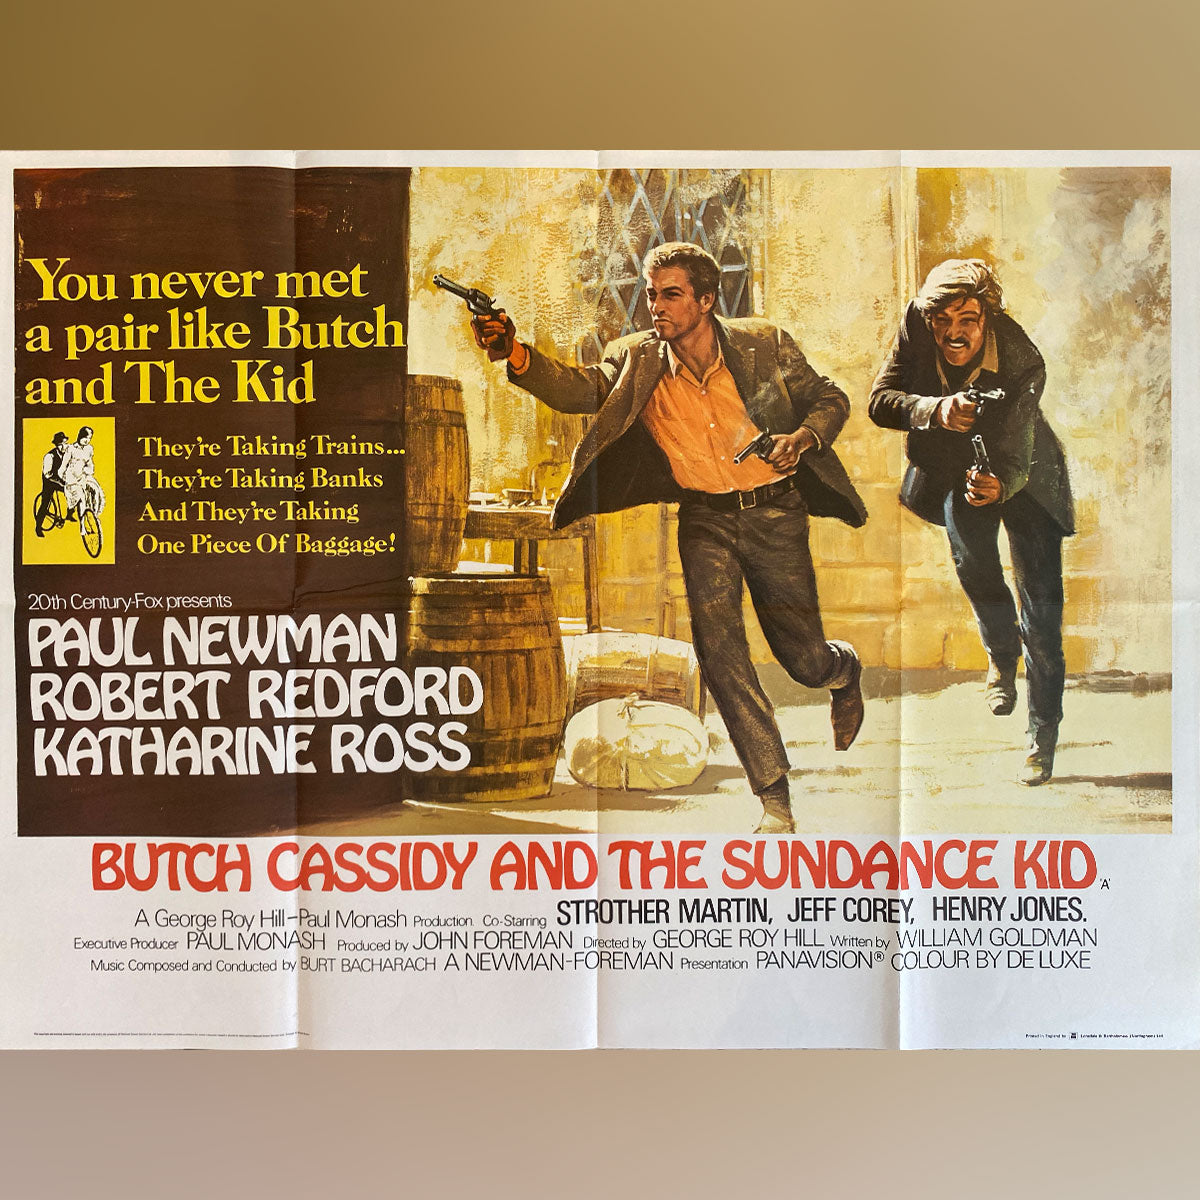 Butch Cassidy and The Sundance Kid (1969)